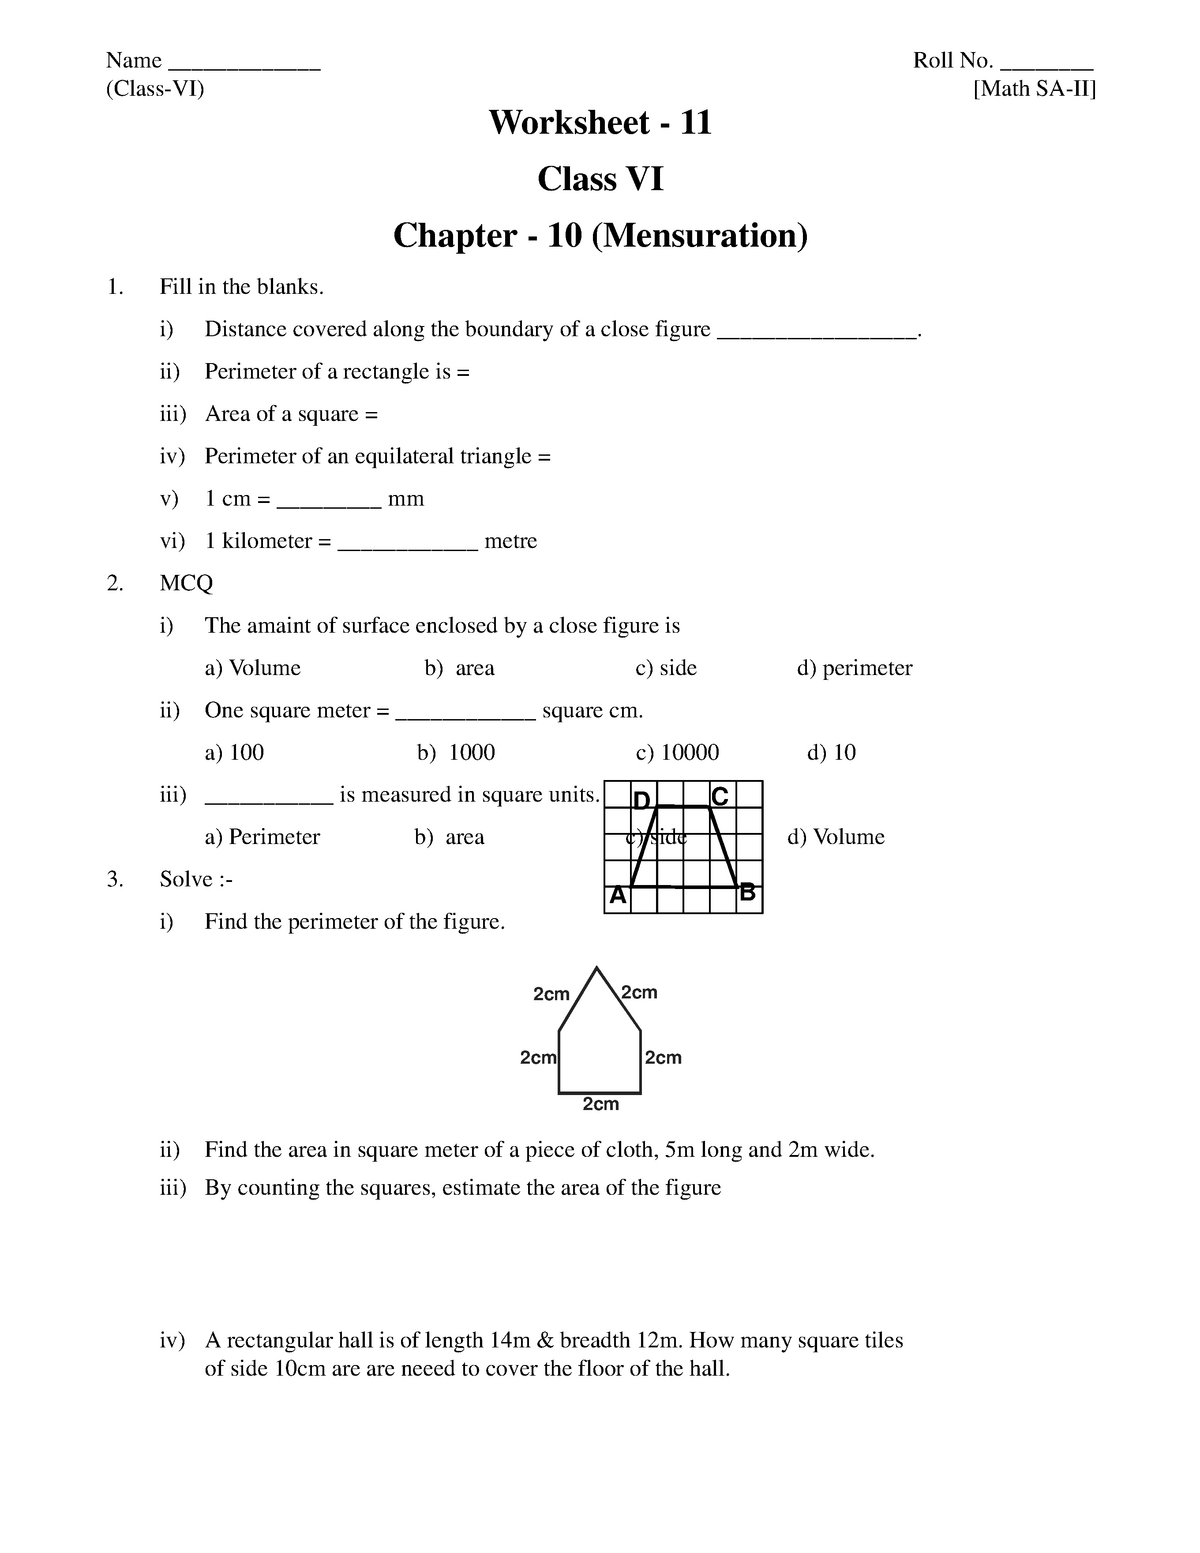 cbse-class-6-mensuration-worksheet-4-name-roll-no-class-vi-worksheet